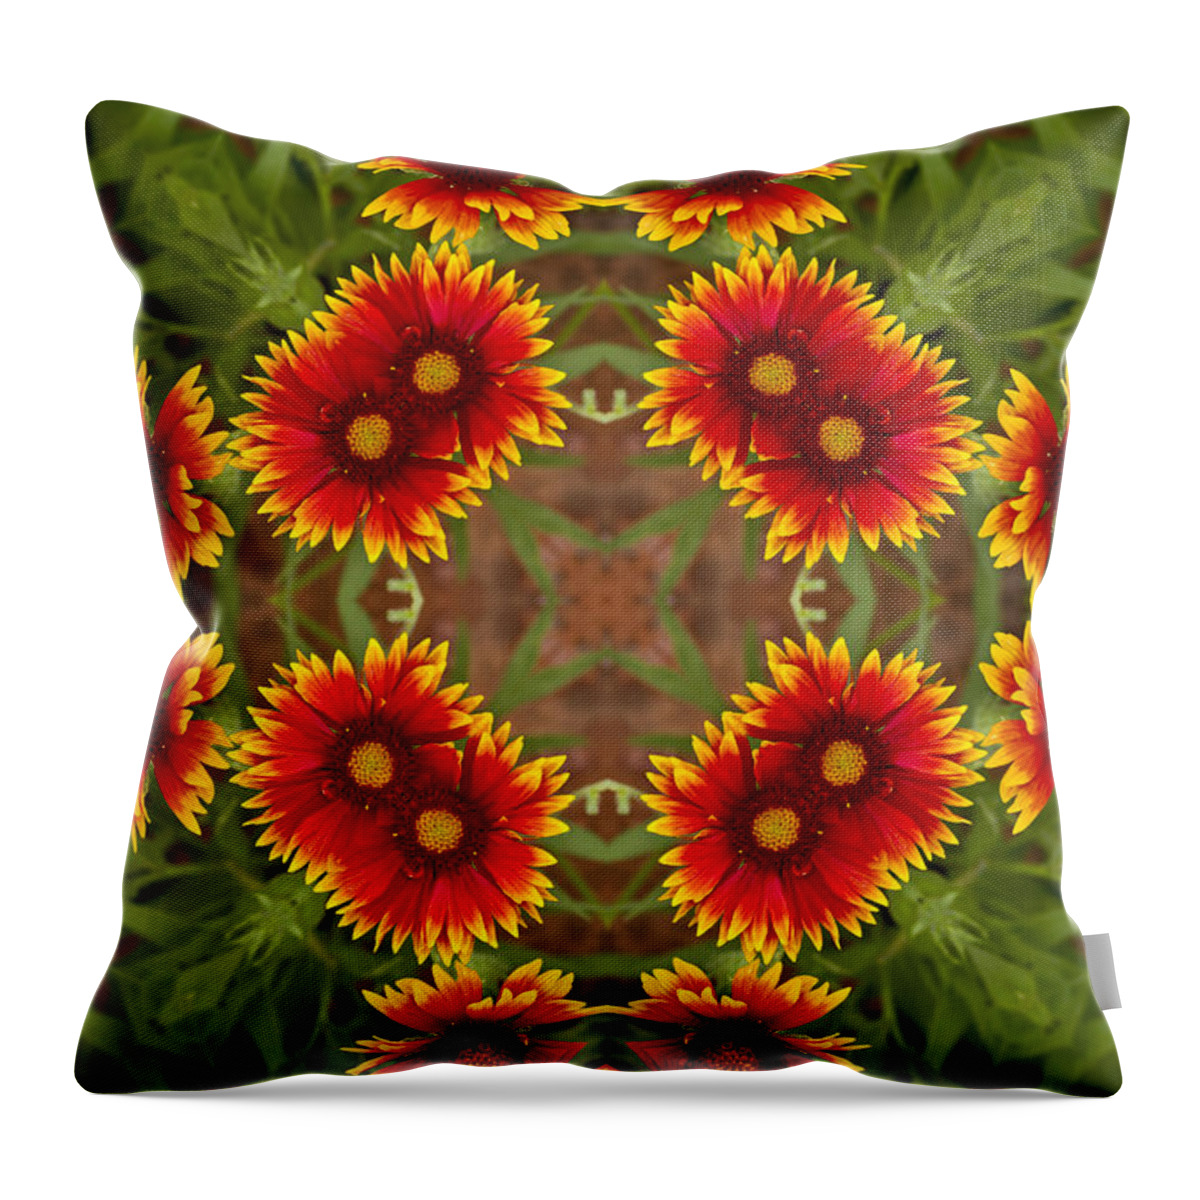 Kaleidoscope Throw Pillow featuring the photograph Indian Blanket Flower - Kaleidoscope by Bill Barber